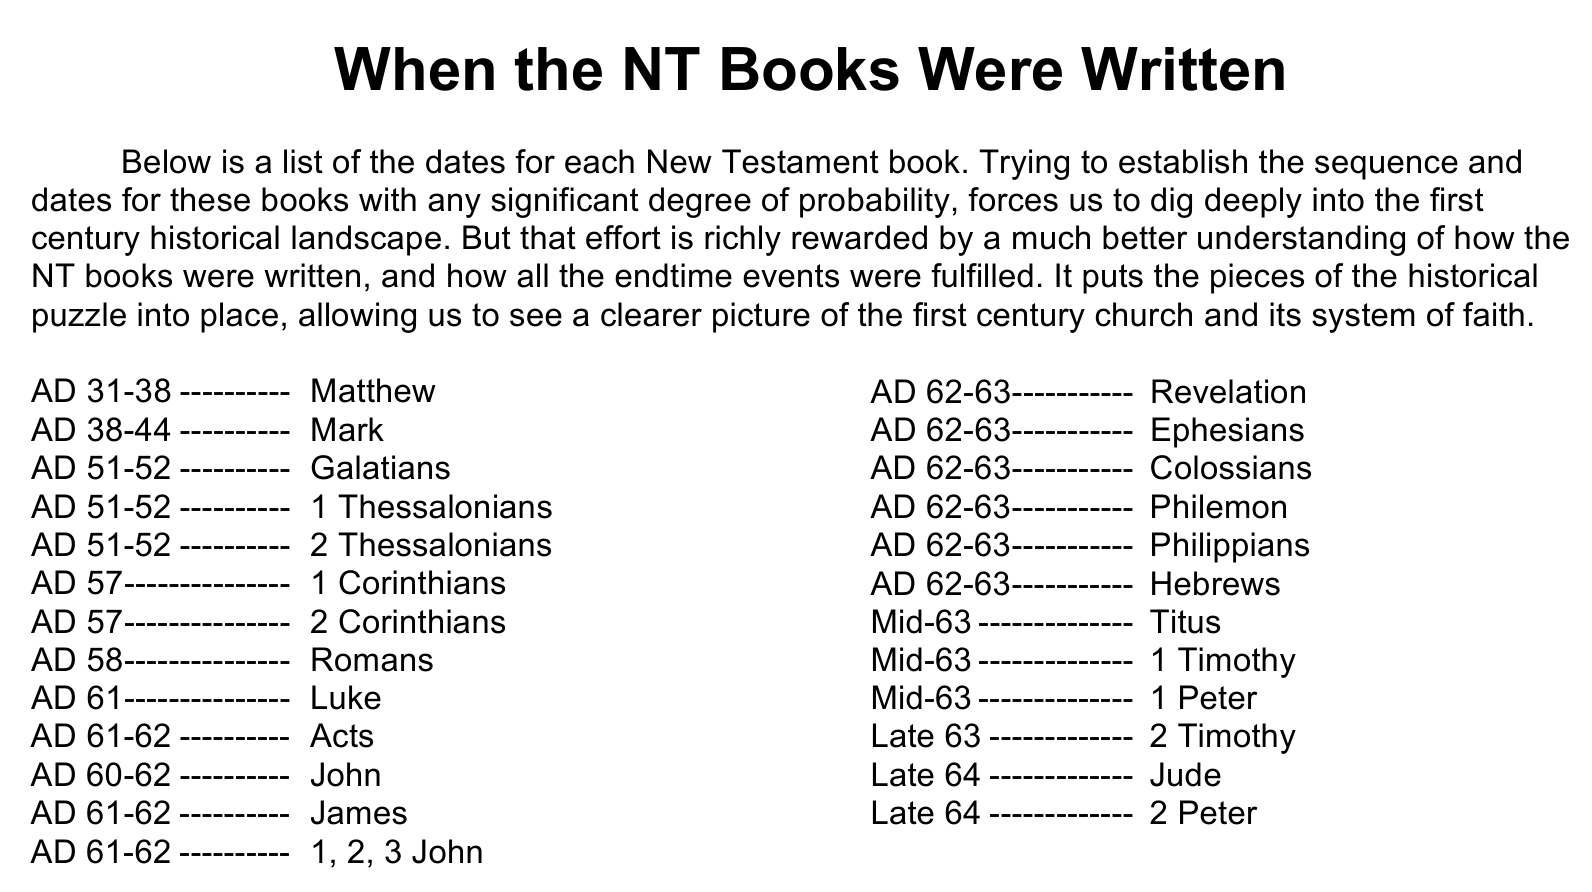 Dates New Testament Books were Written